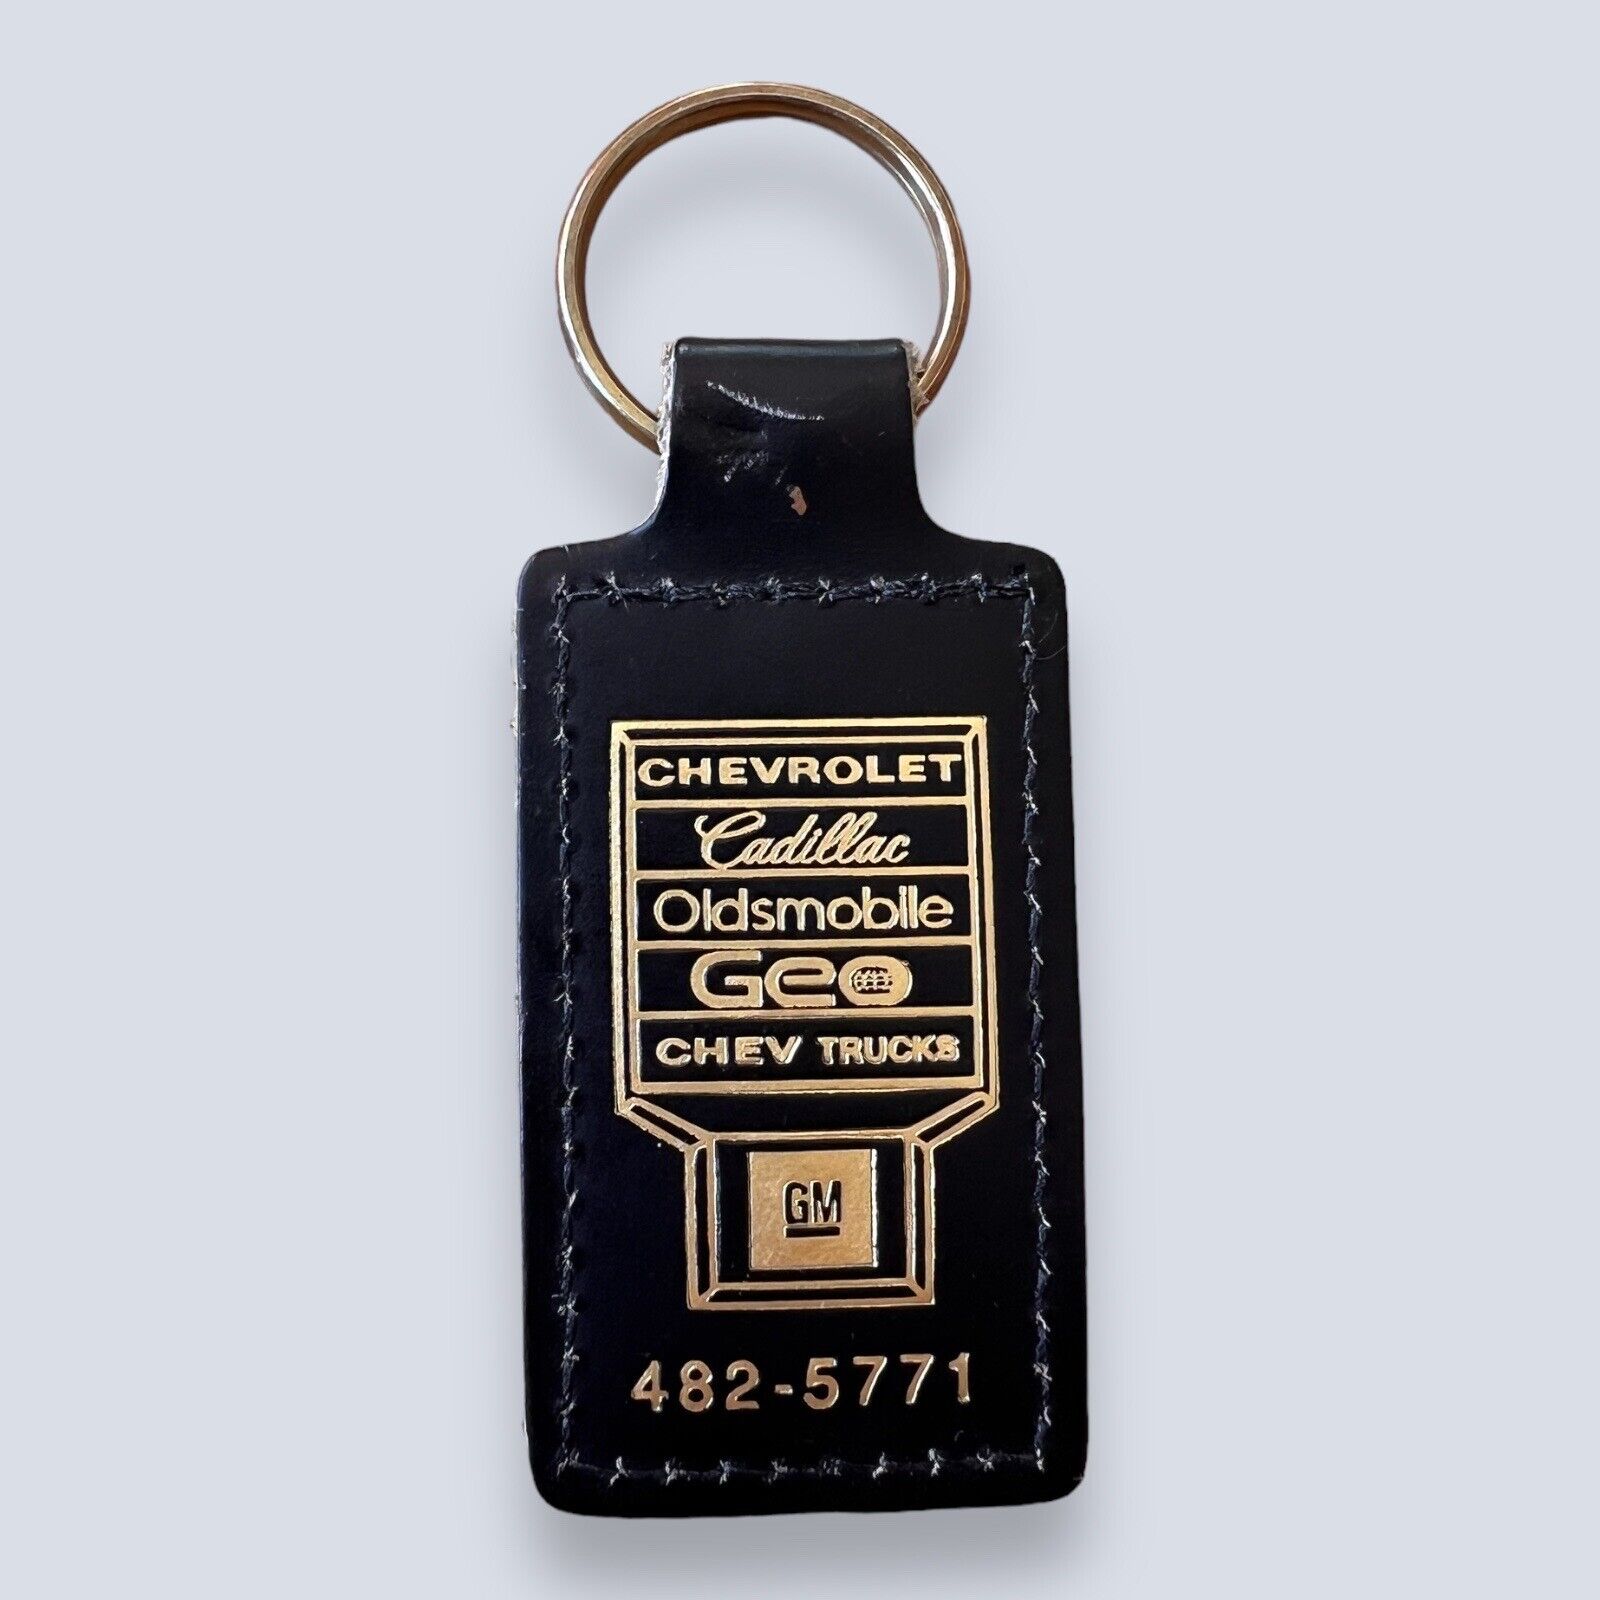 Vintage Edmonton Motors Keychain Key Ring Fob Logo Advertising Car Key Ring 70s